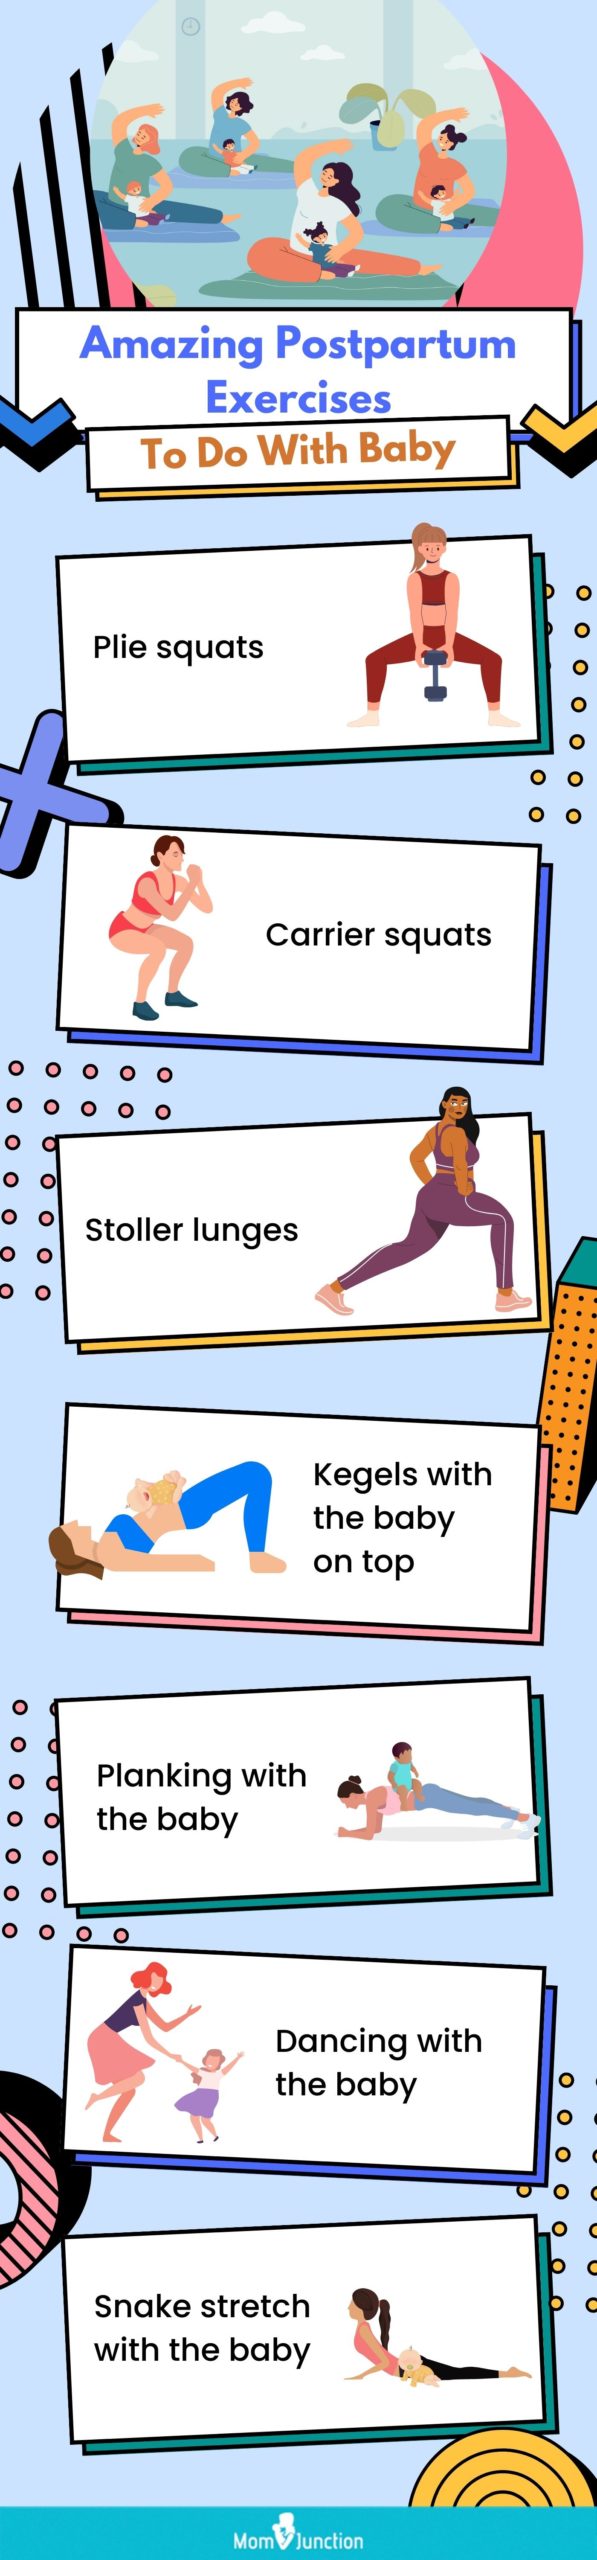 amazing postpartum exercises to do with baby (infographic)